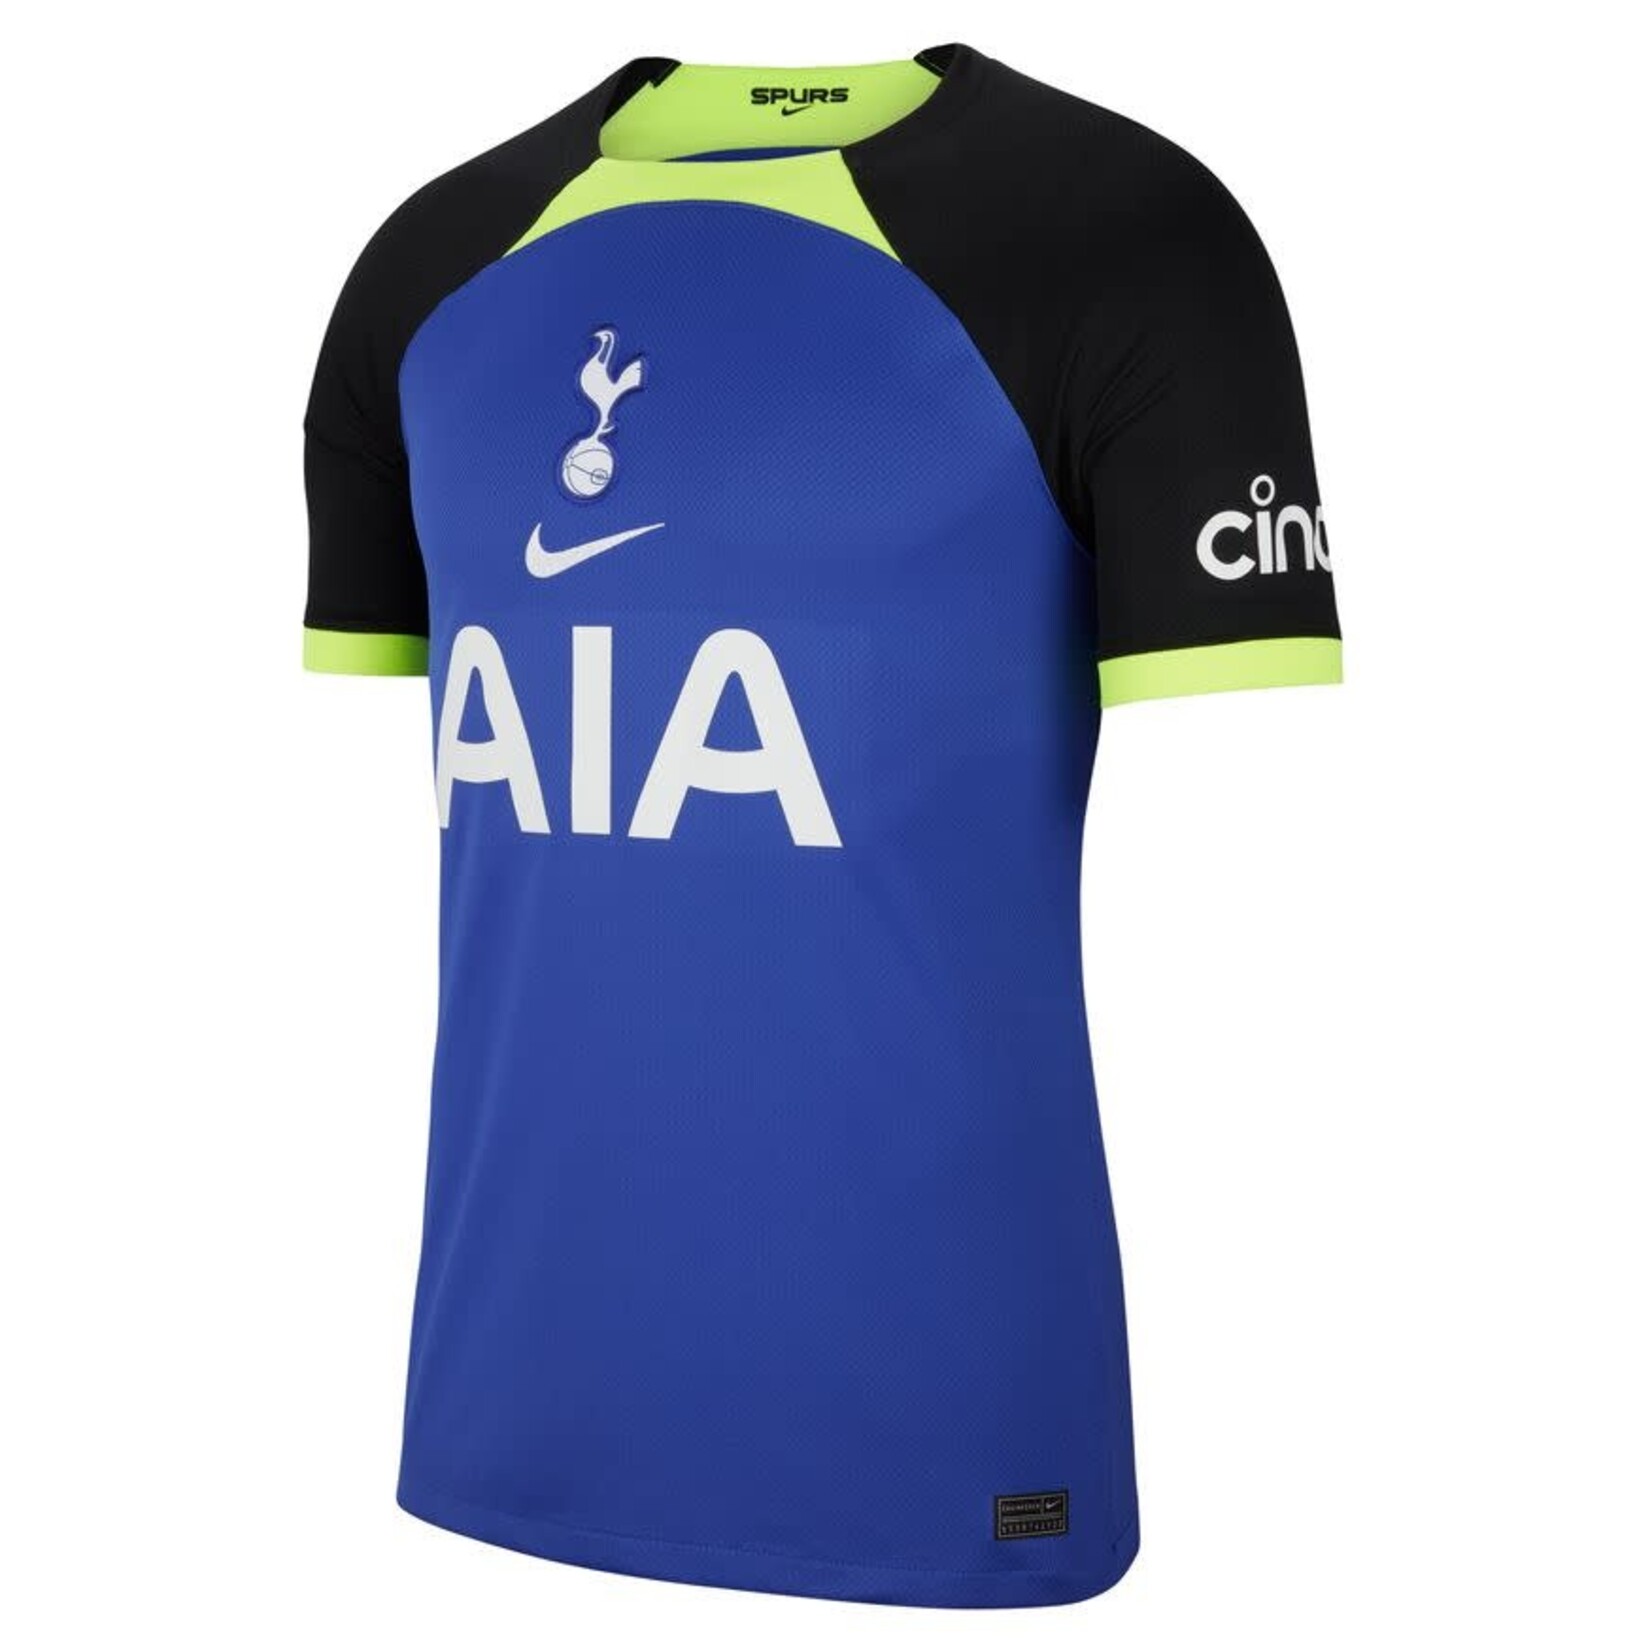 Men's Nike Tottenham Hotspurs Stadium Home Jersey 20/21